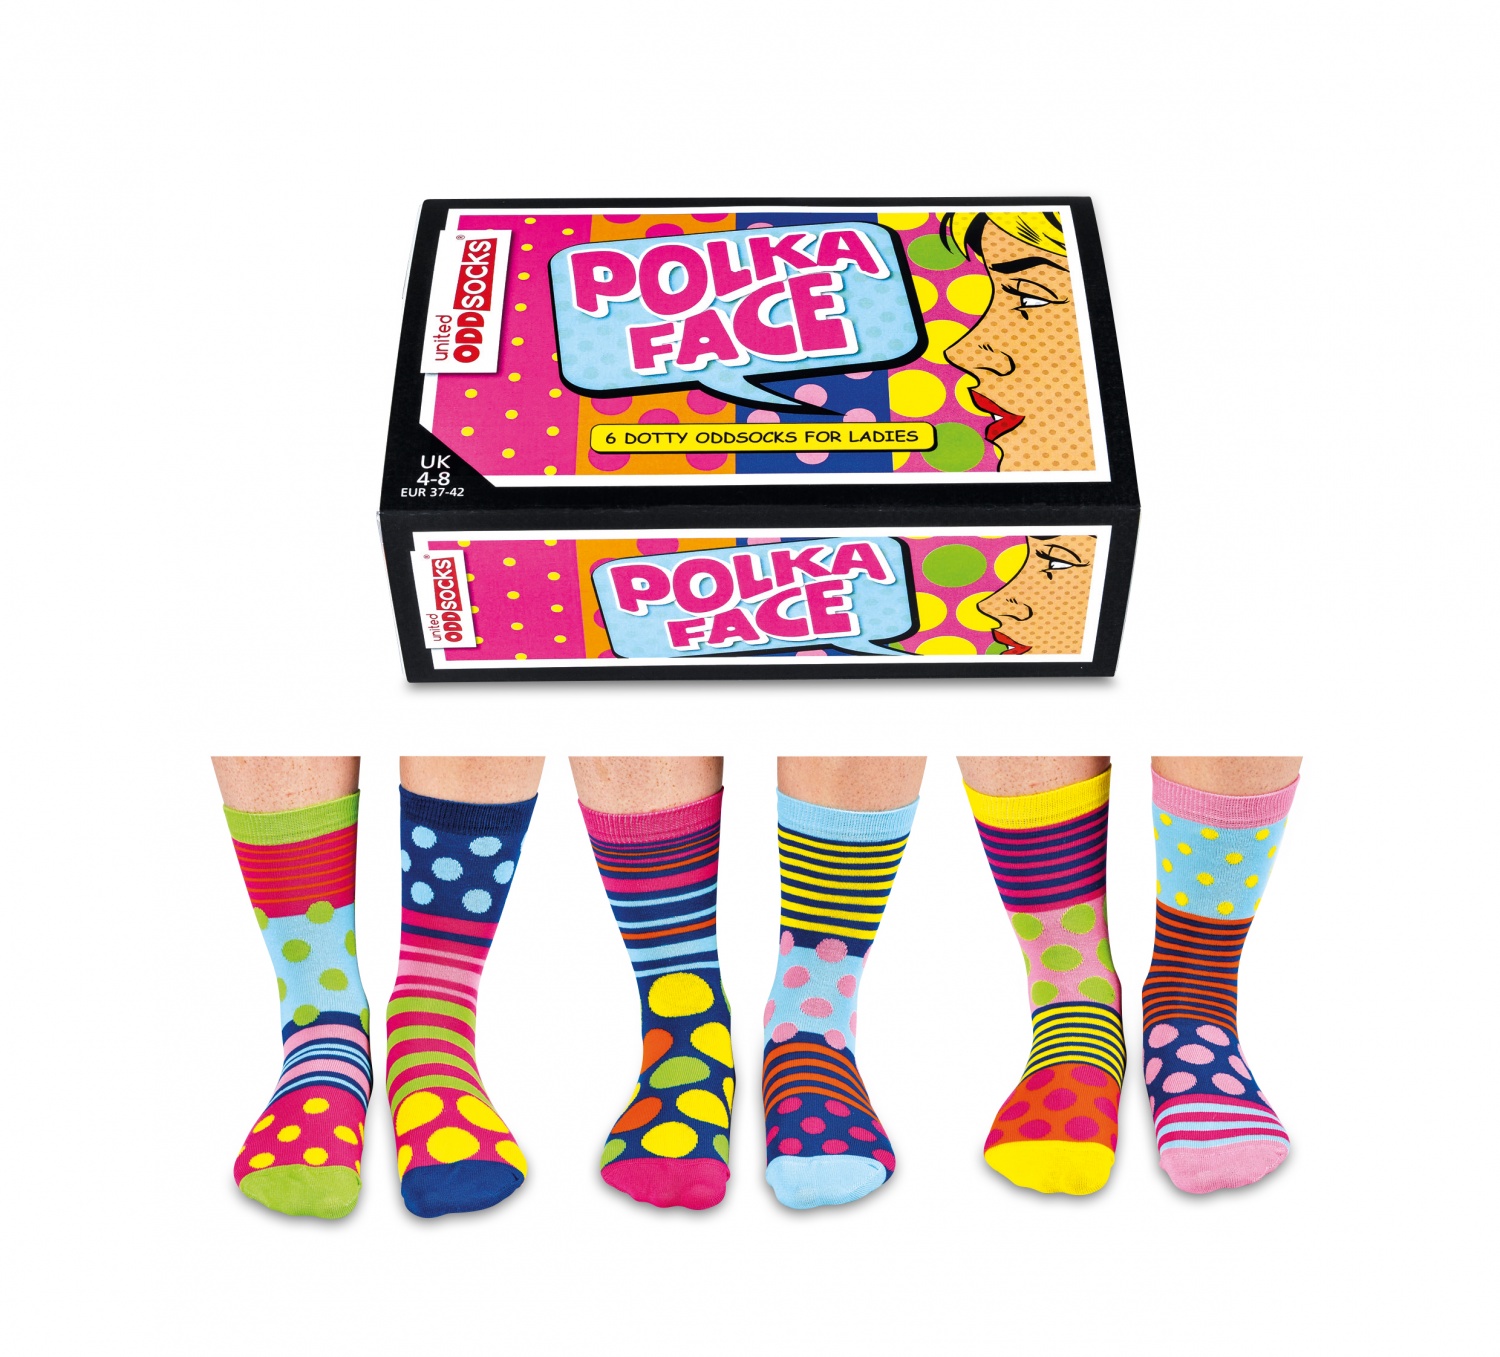 United Oddsocks Polka Face Design - Ladies Novelty Socks